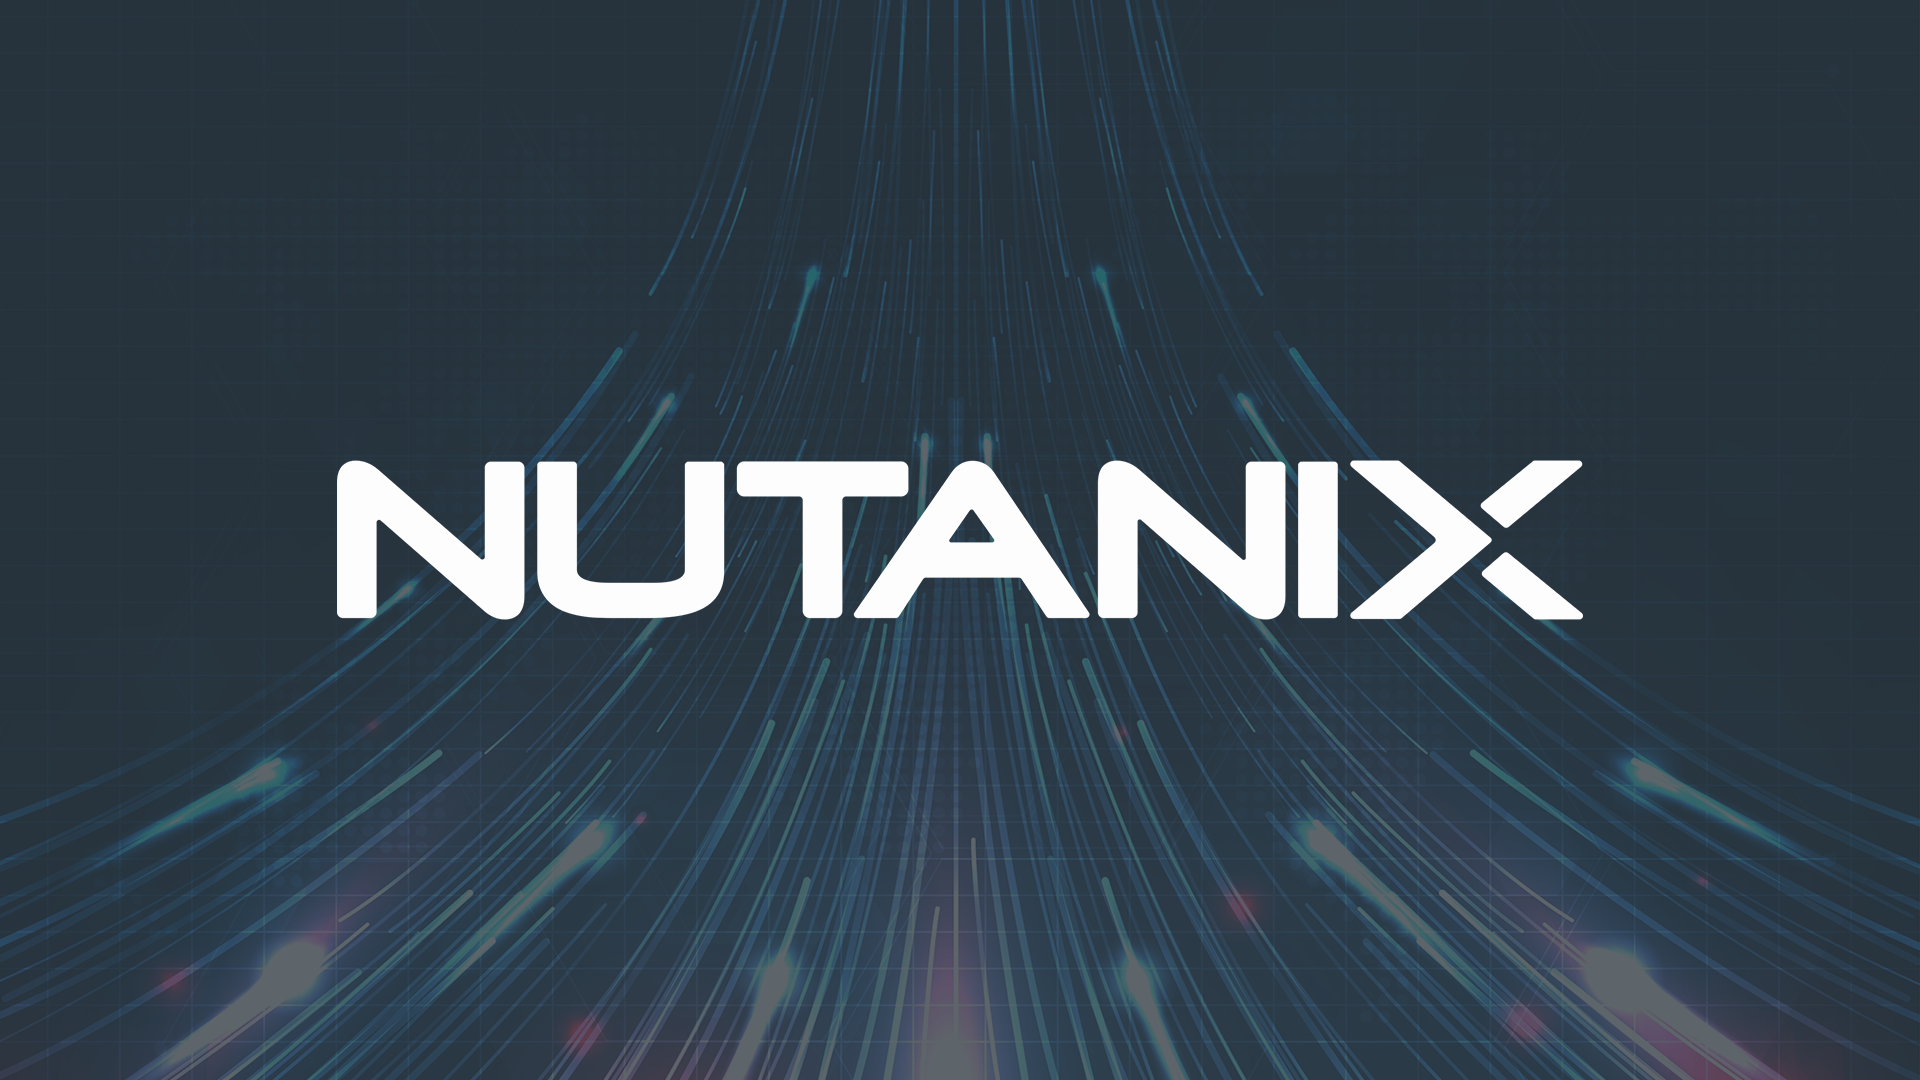 nutanix_thumb-1